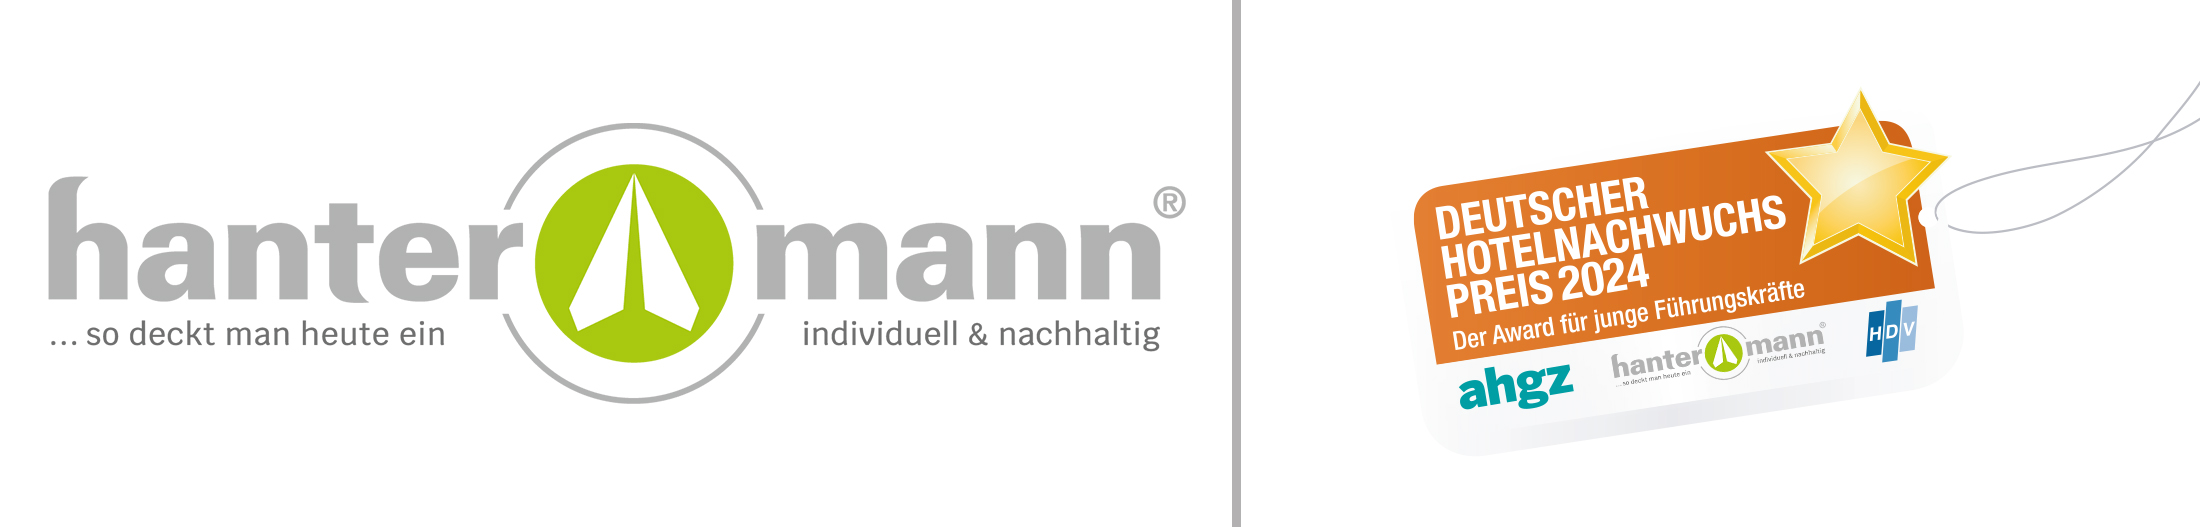 Hantermann Logo